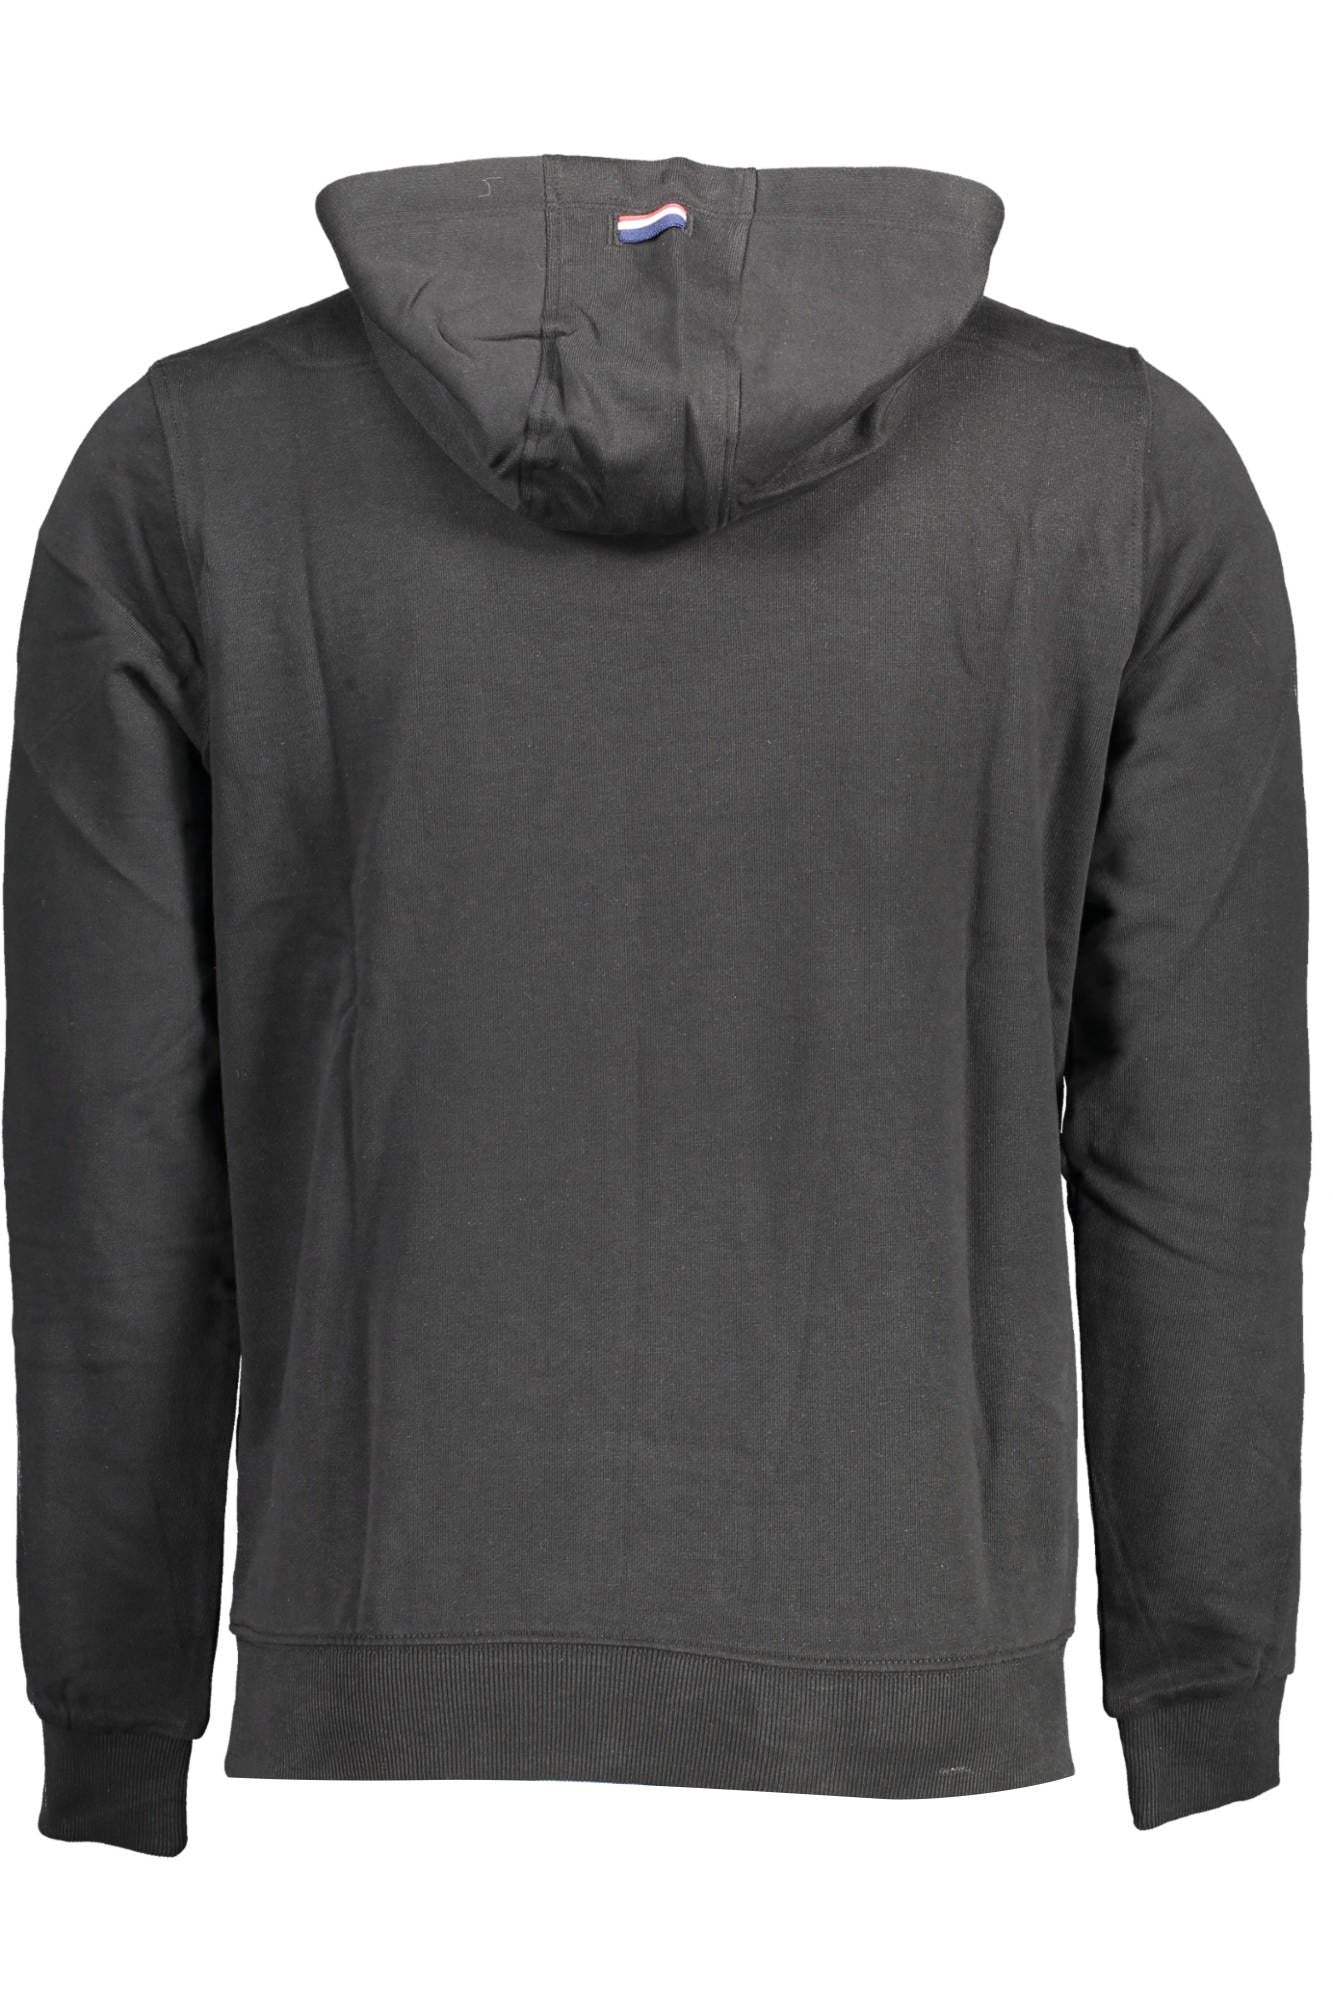 Classic Black Cotton Hooded Sweatshirt with Logo